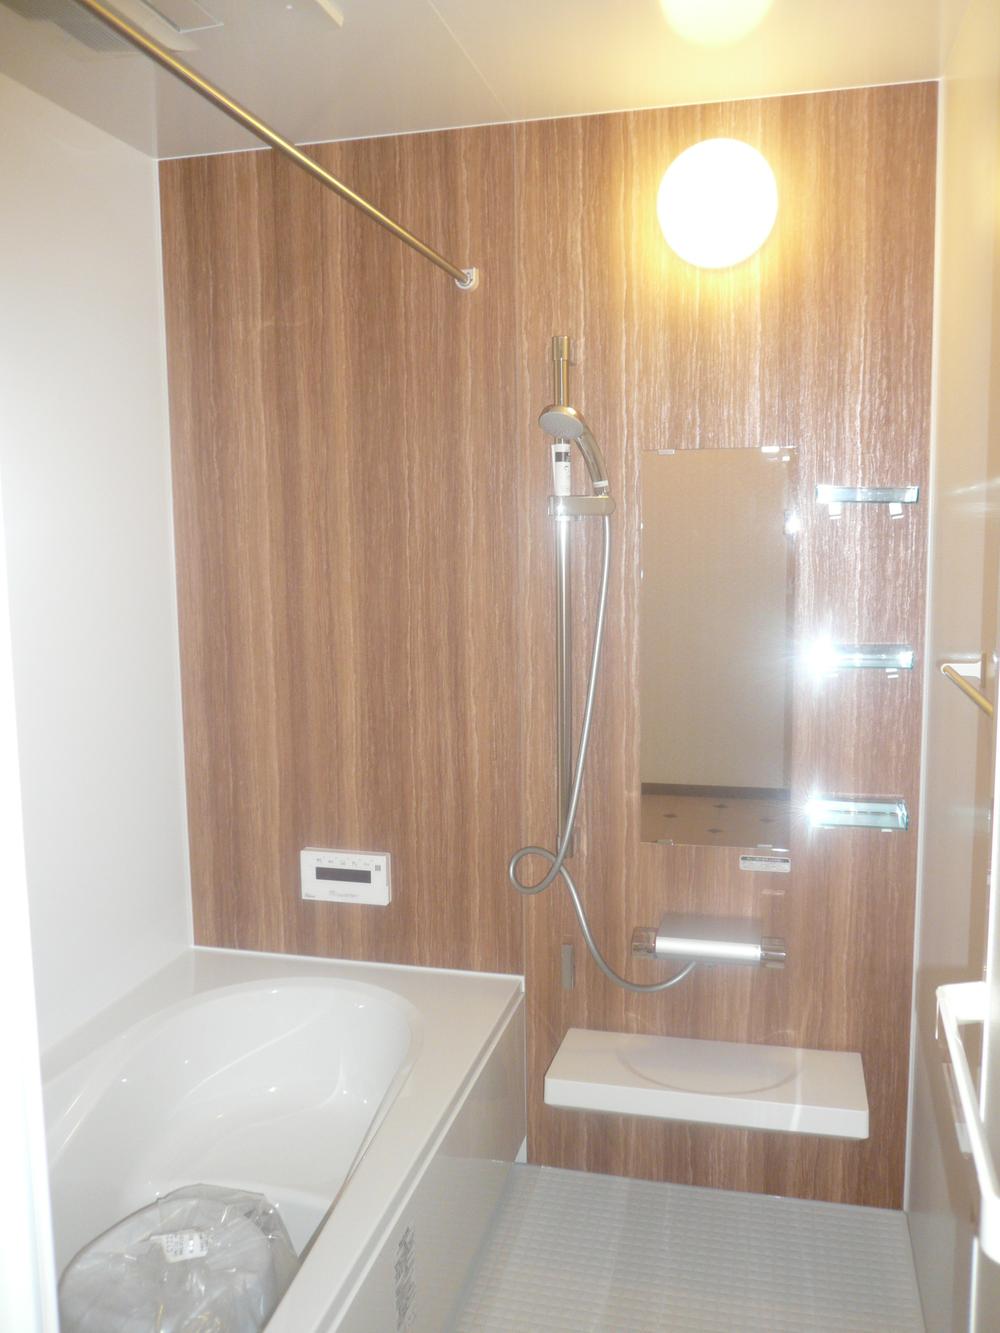 Same specifications photo (bathroom). Same specification standard bathroom LIXIL Kireiyu 1616 size